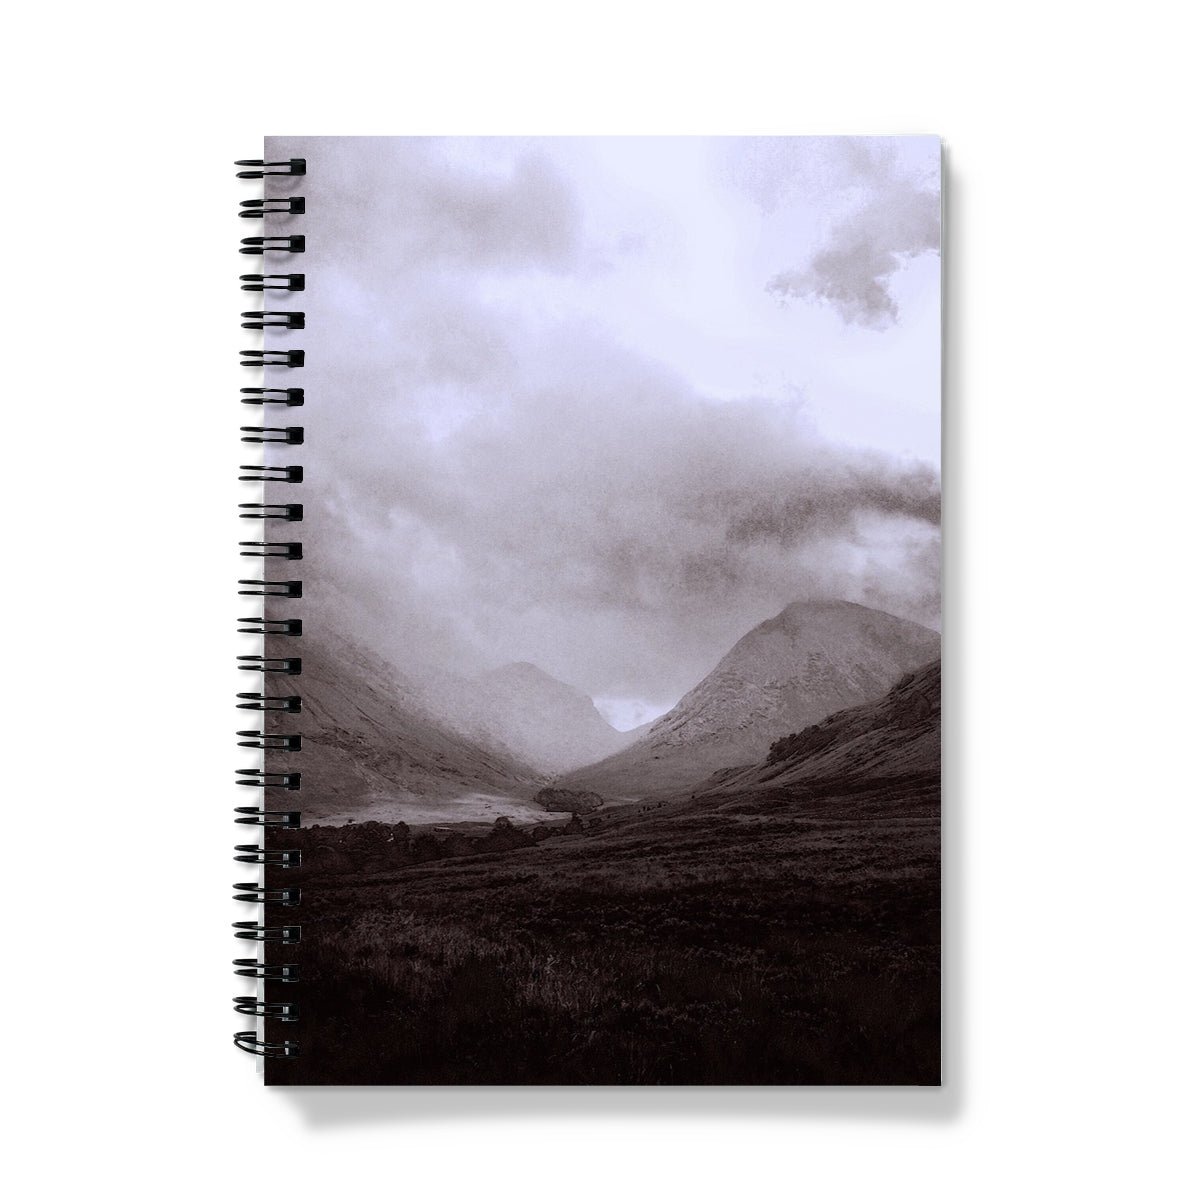 Glencoe Mist Art Gifts Notebook-Journals & Notebooks-Glencoe Art Gallery-A4-Graph-Paintings, Prints, Homeware, Art Gifts From Scotland By Scottish Artist Kevin Hunter